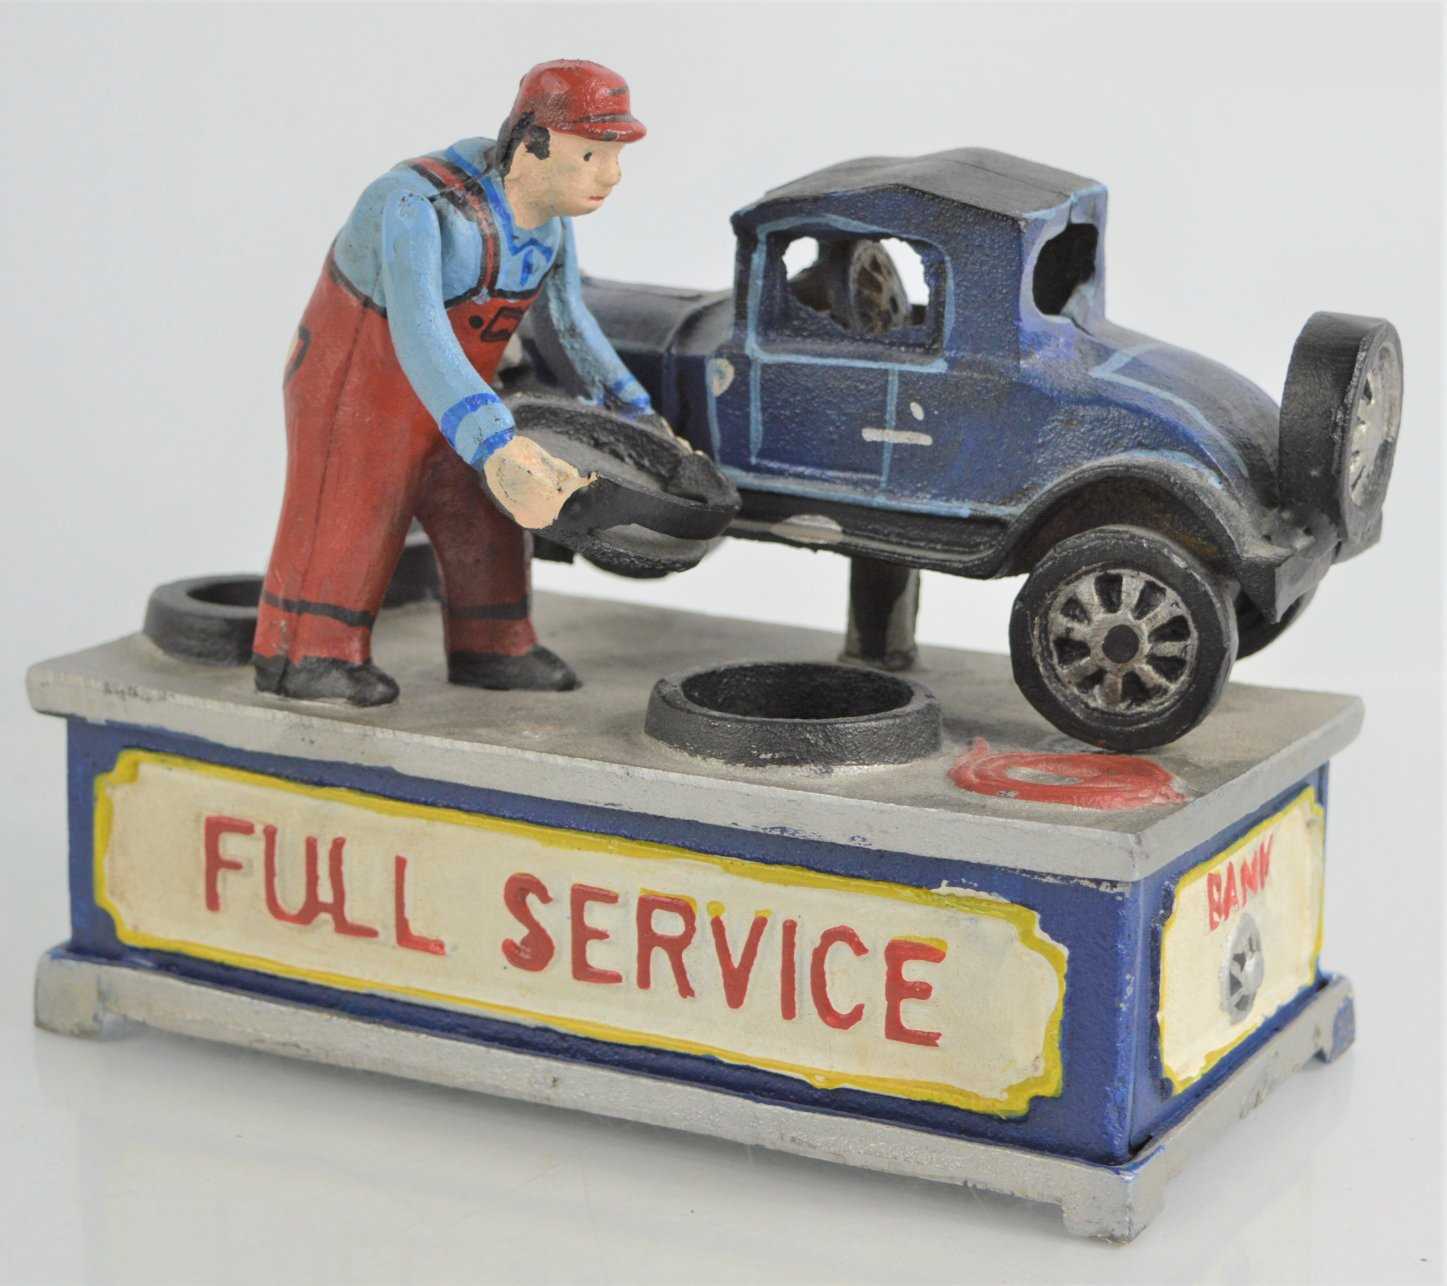 A cast iron novelty "Full Service" money box